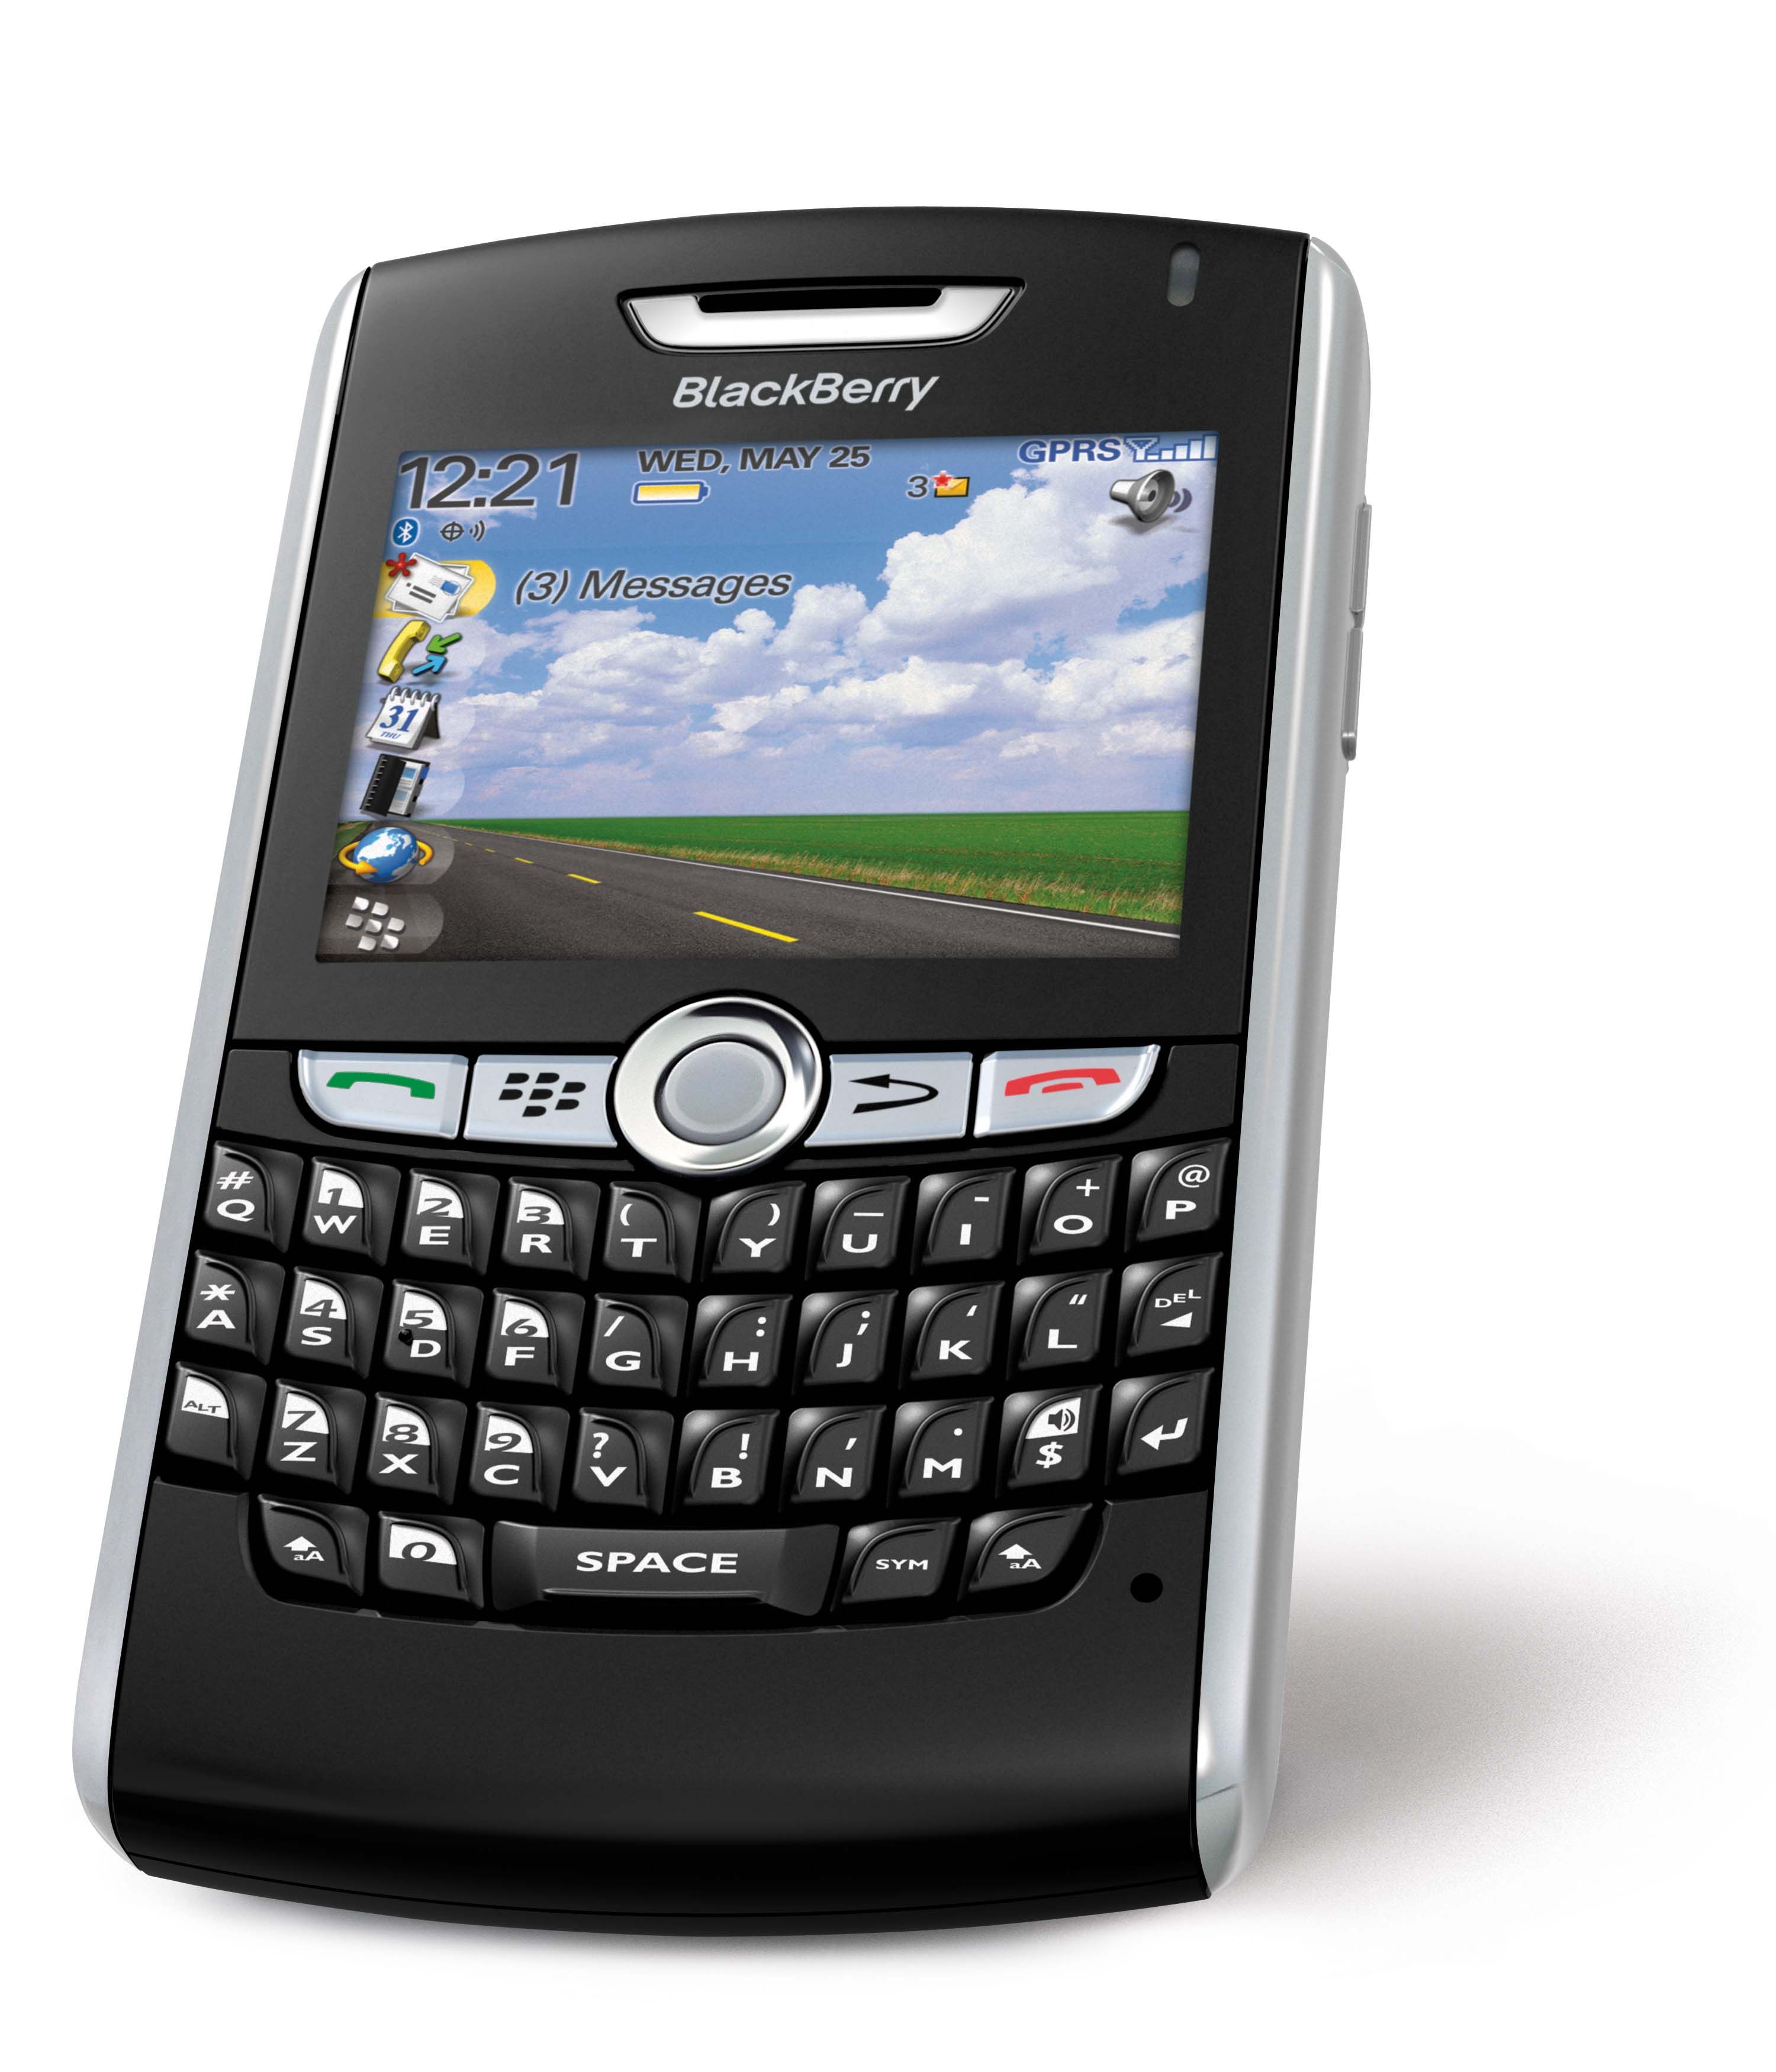 blackberry 8800 smartphone image 1